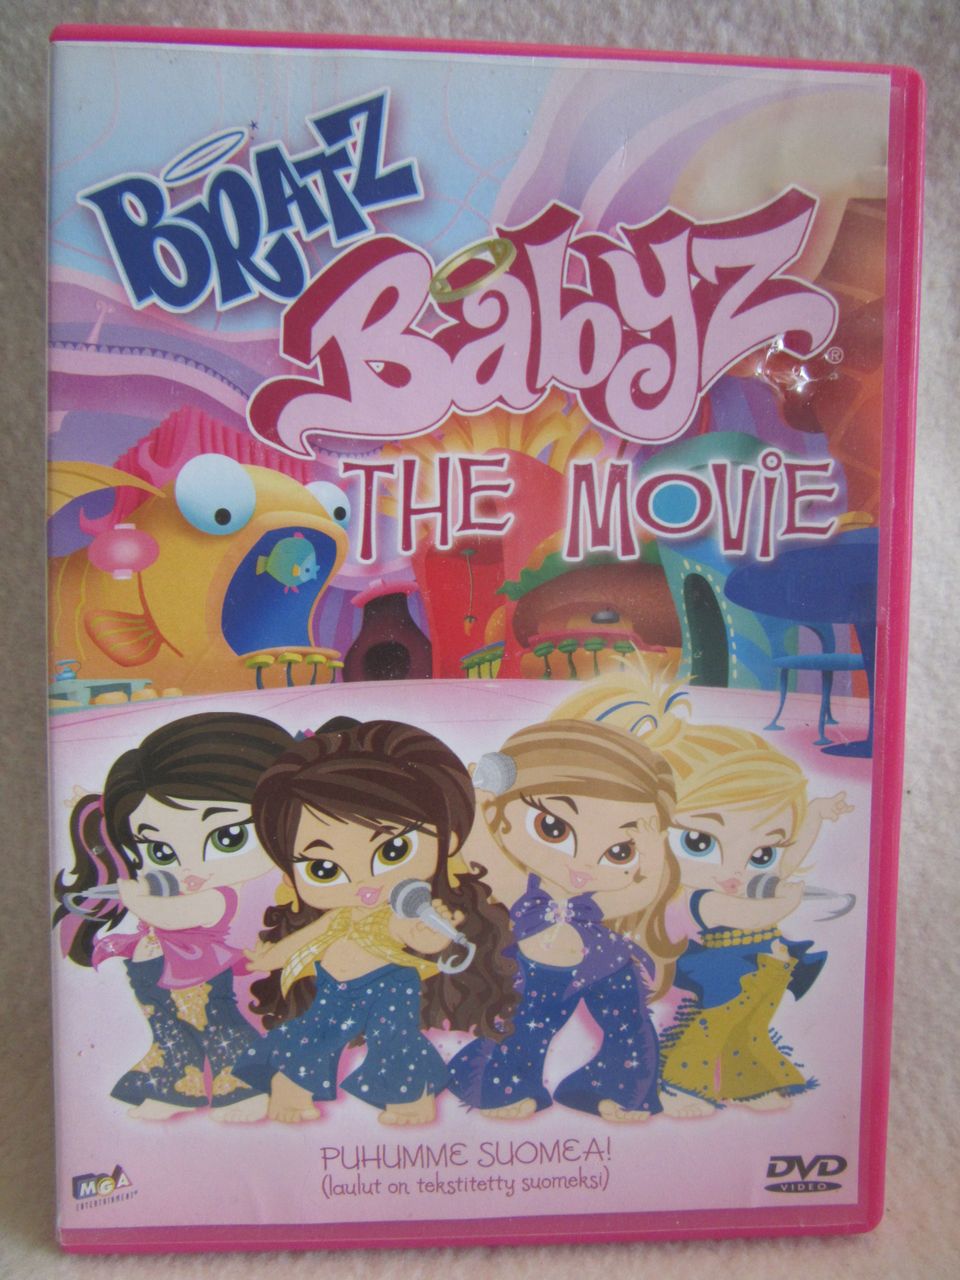 Bratz Babyz the Movie dvd